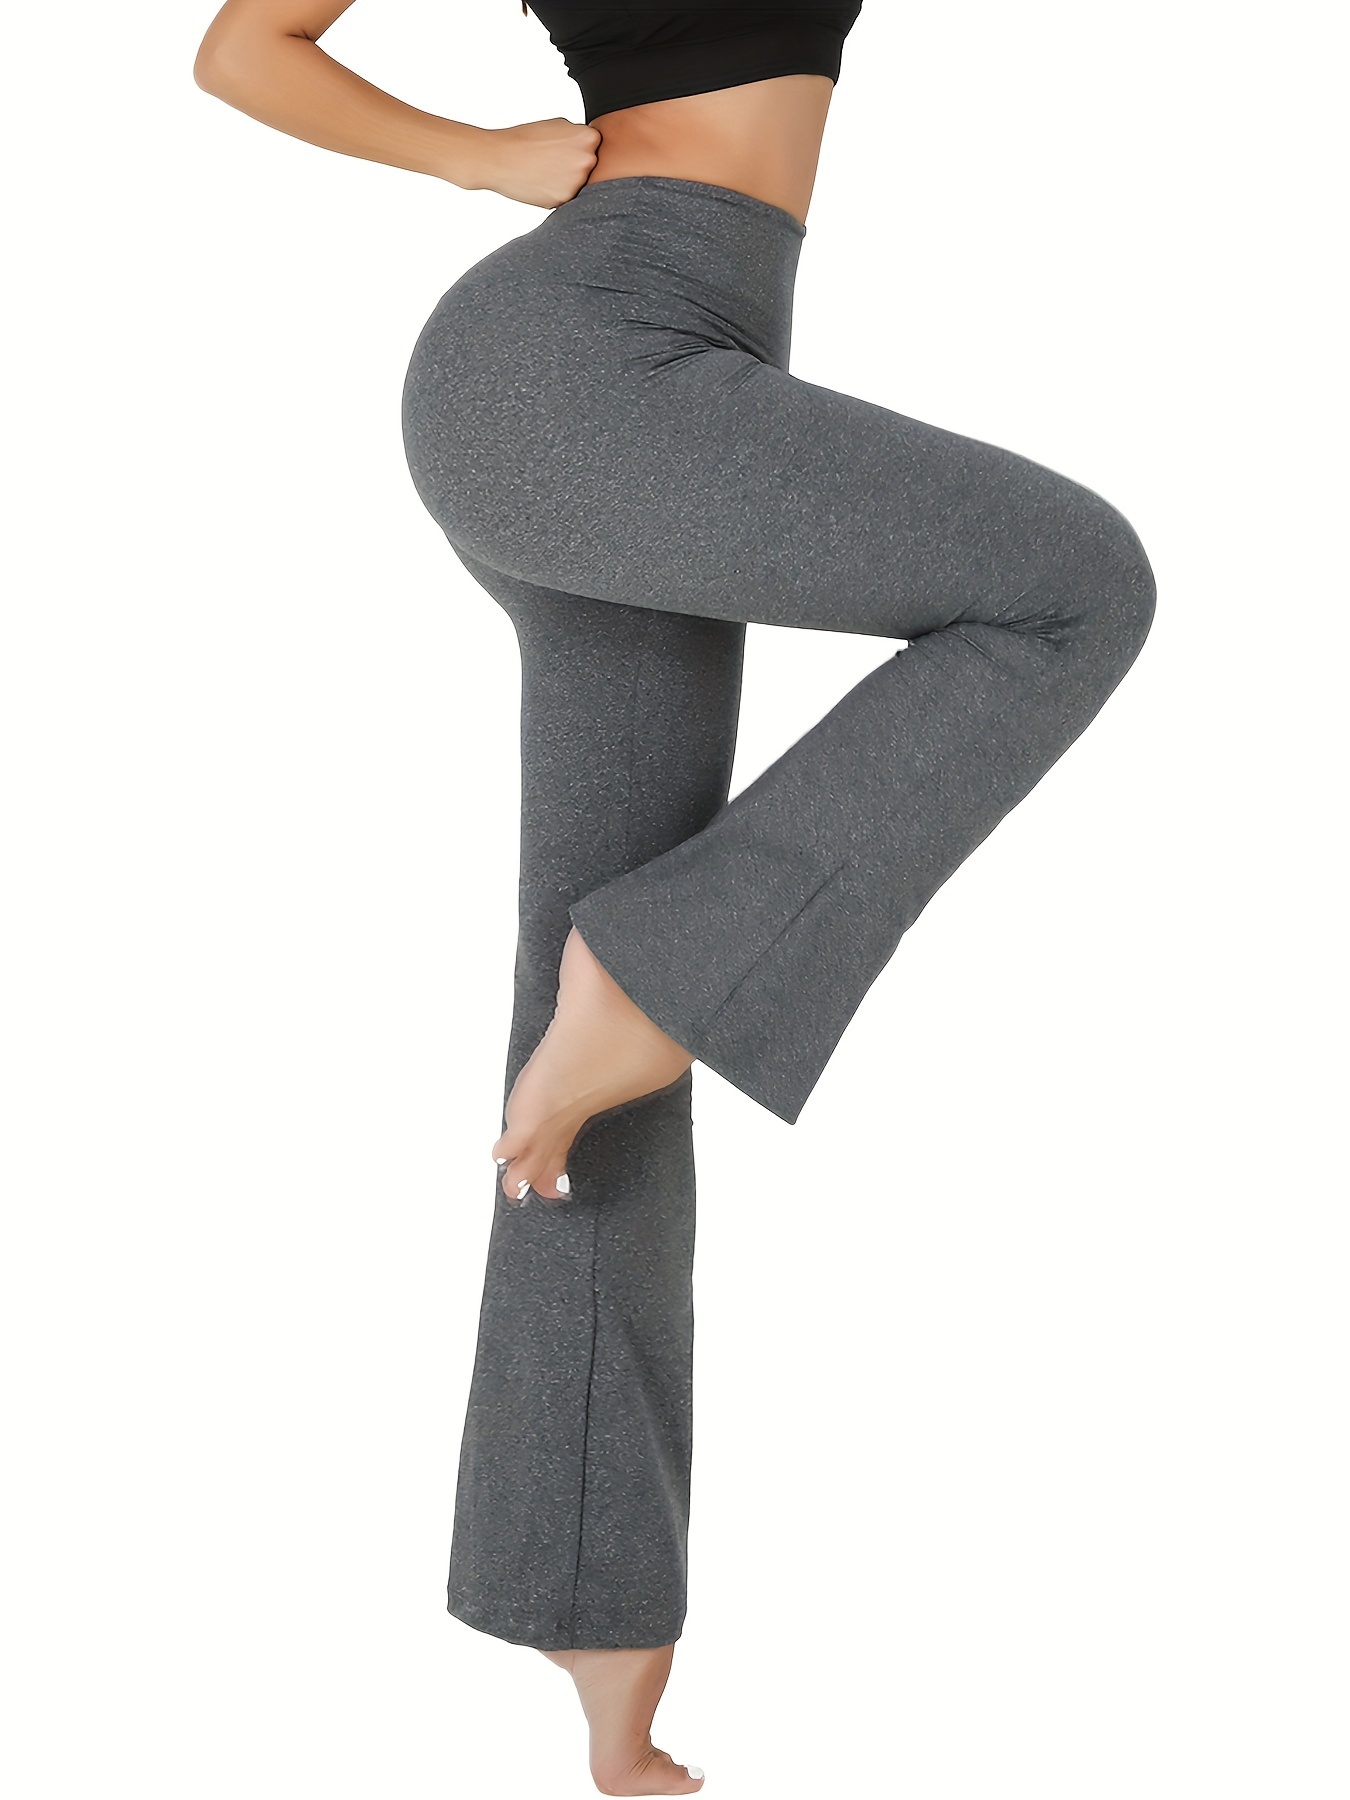 Buy Women's Bootcut Yoga Pants High Waist Tummy Control Long